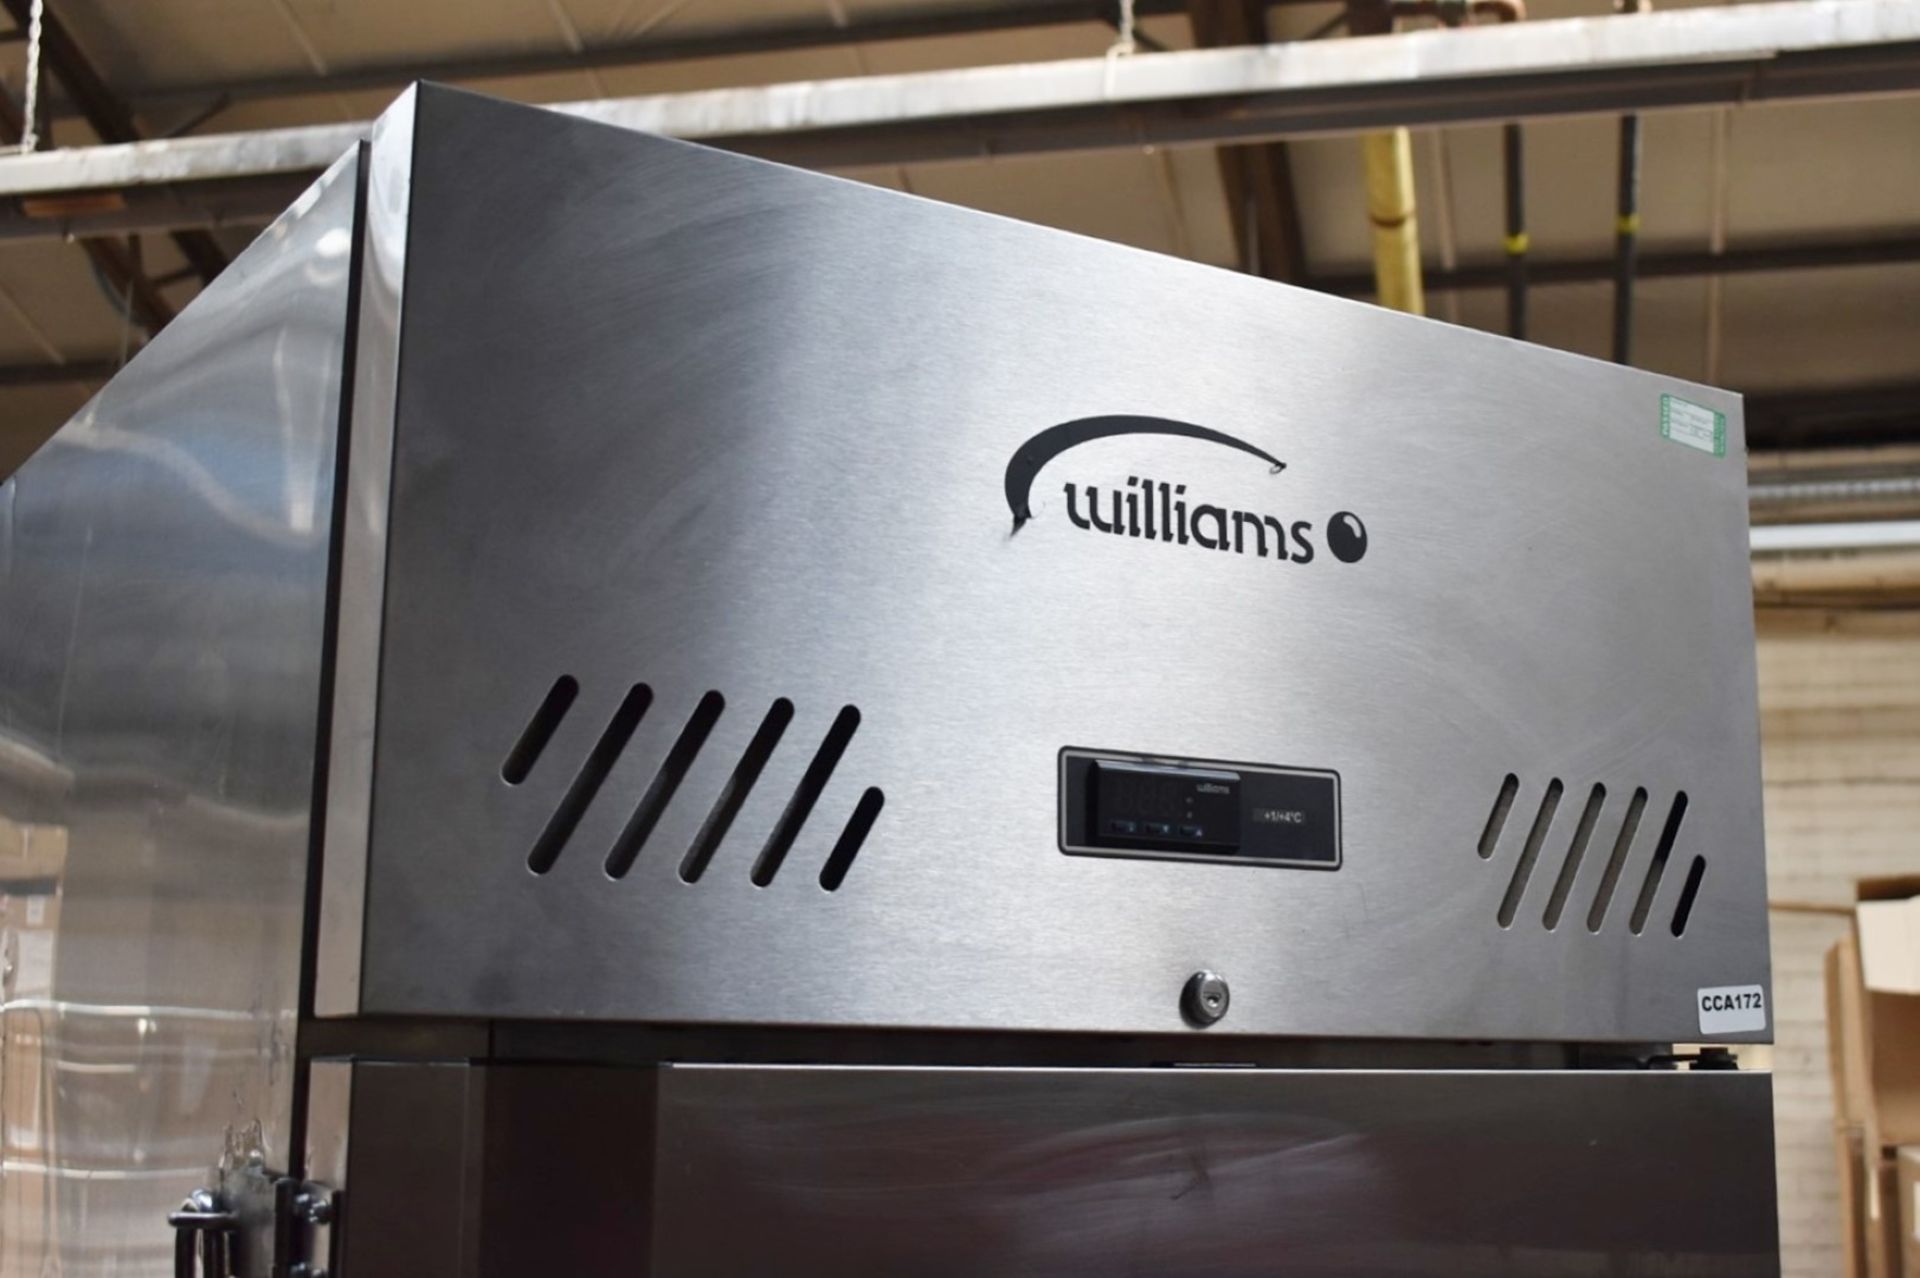 1 x Williams Jade Upright Single Door Refrigerator With Stainless Steel Exterior - Model HJ1TSA - - Image 8 of 11